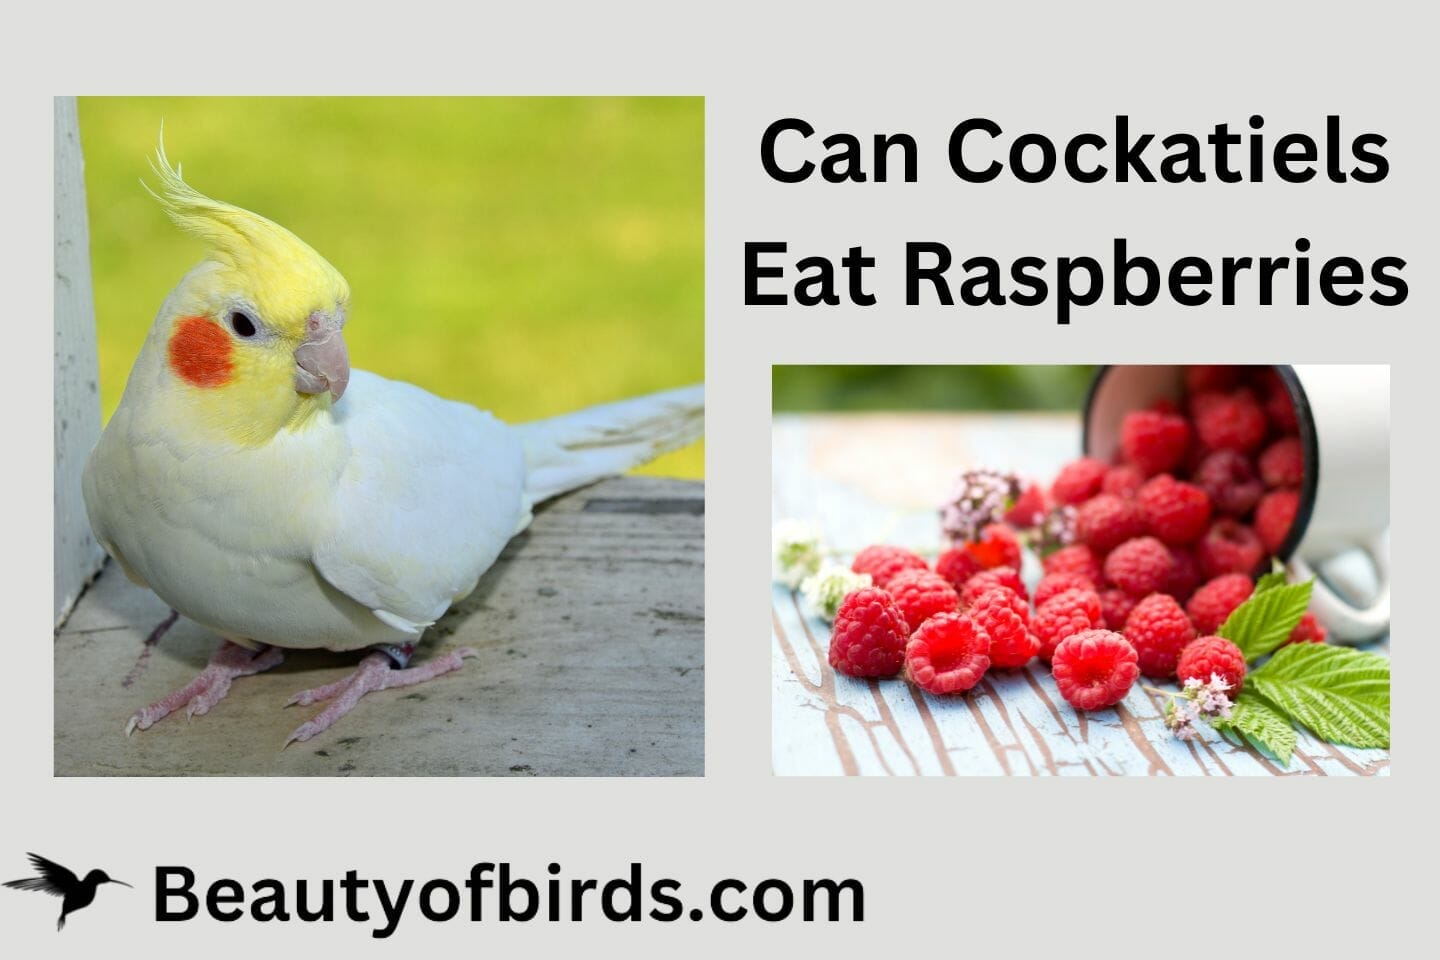 Can Cockatiels Eat Raspberries